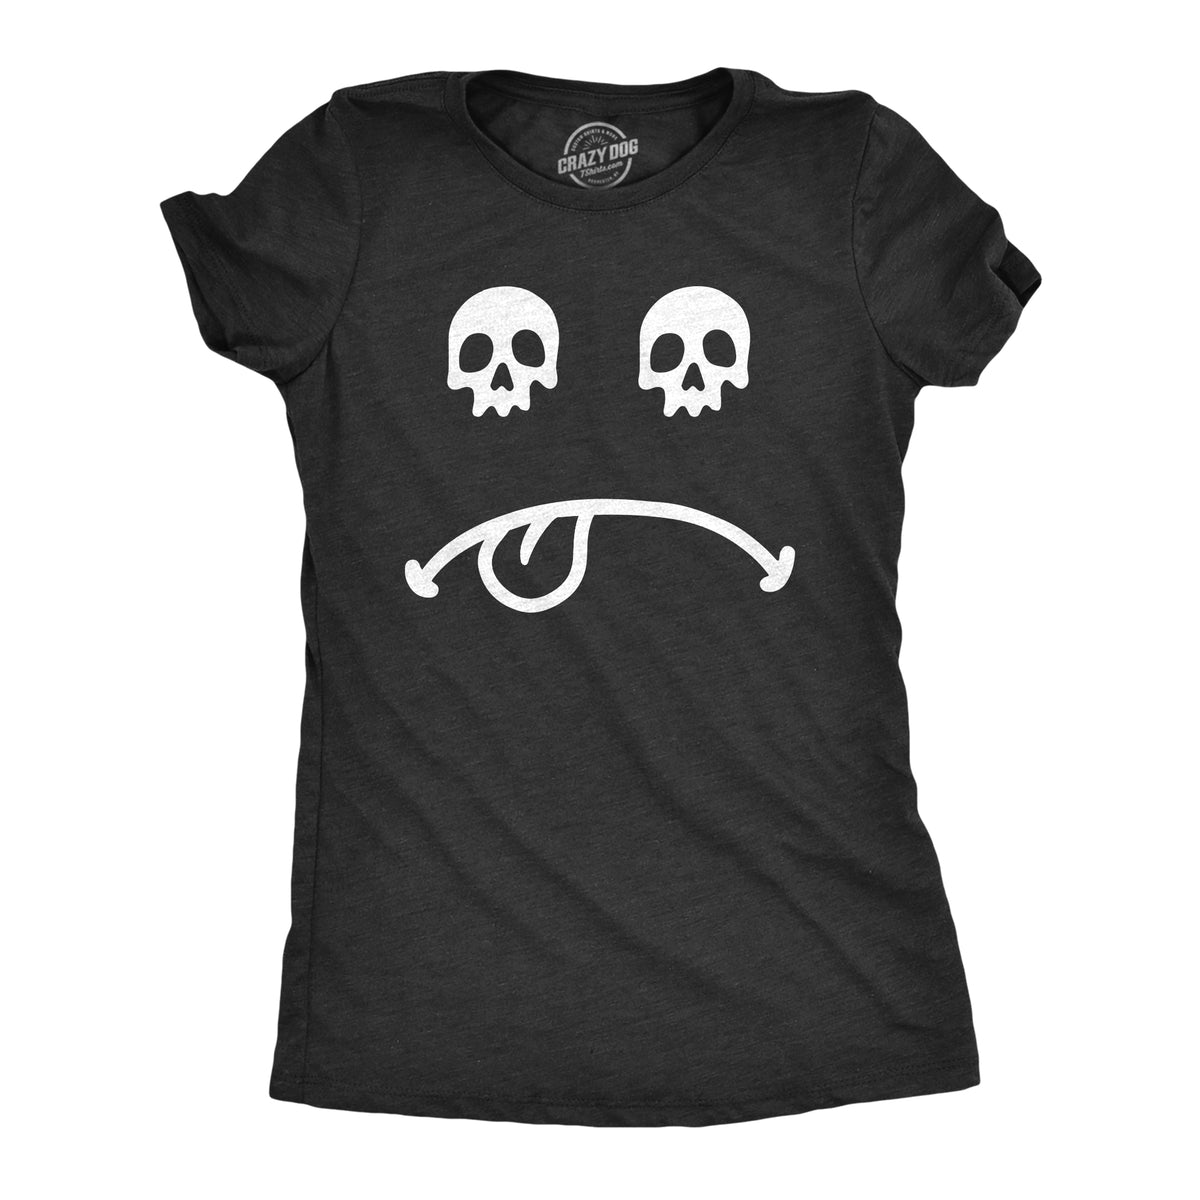 Funny Heather Black - SKULLEYES Skull Eyes Smile Womens T Shirt Nerdy sarcastic Tee